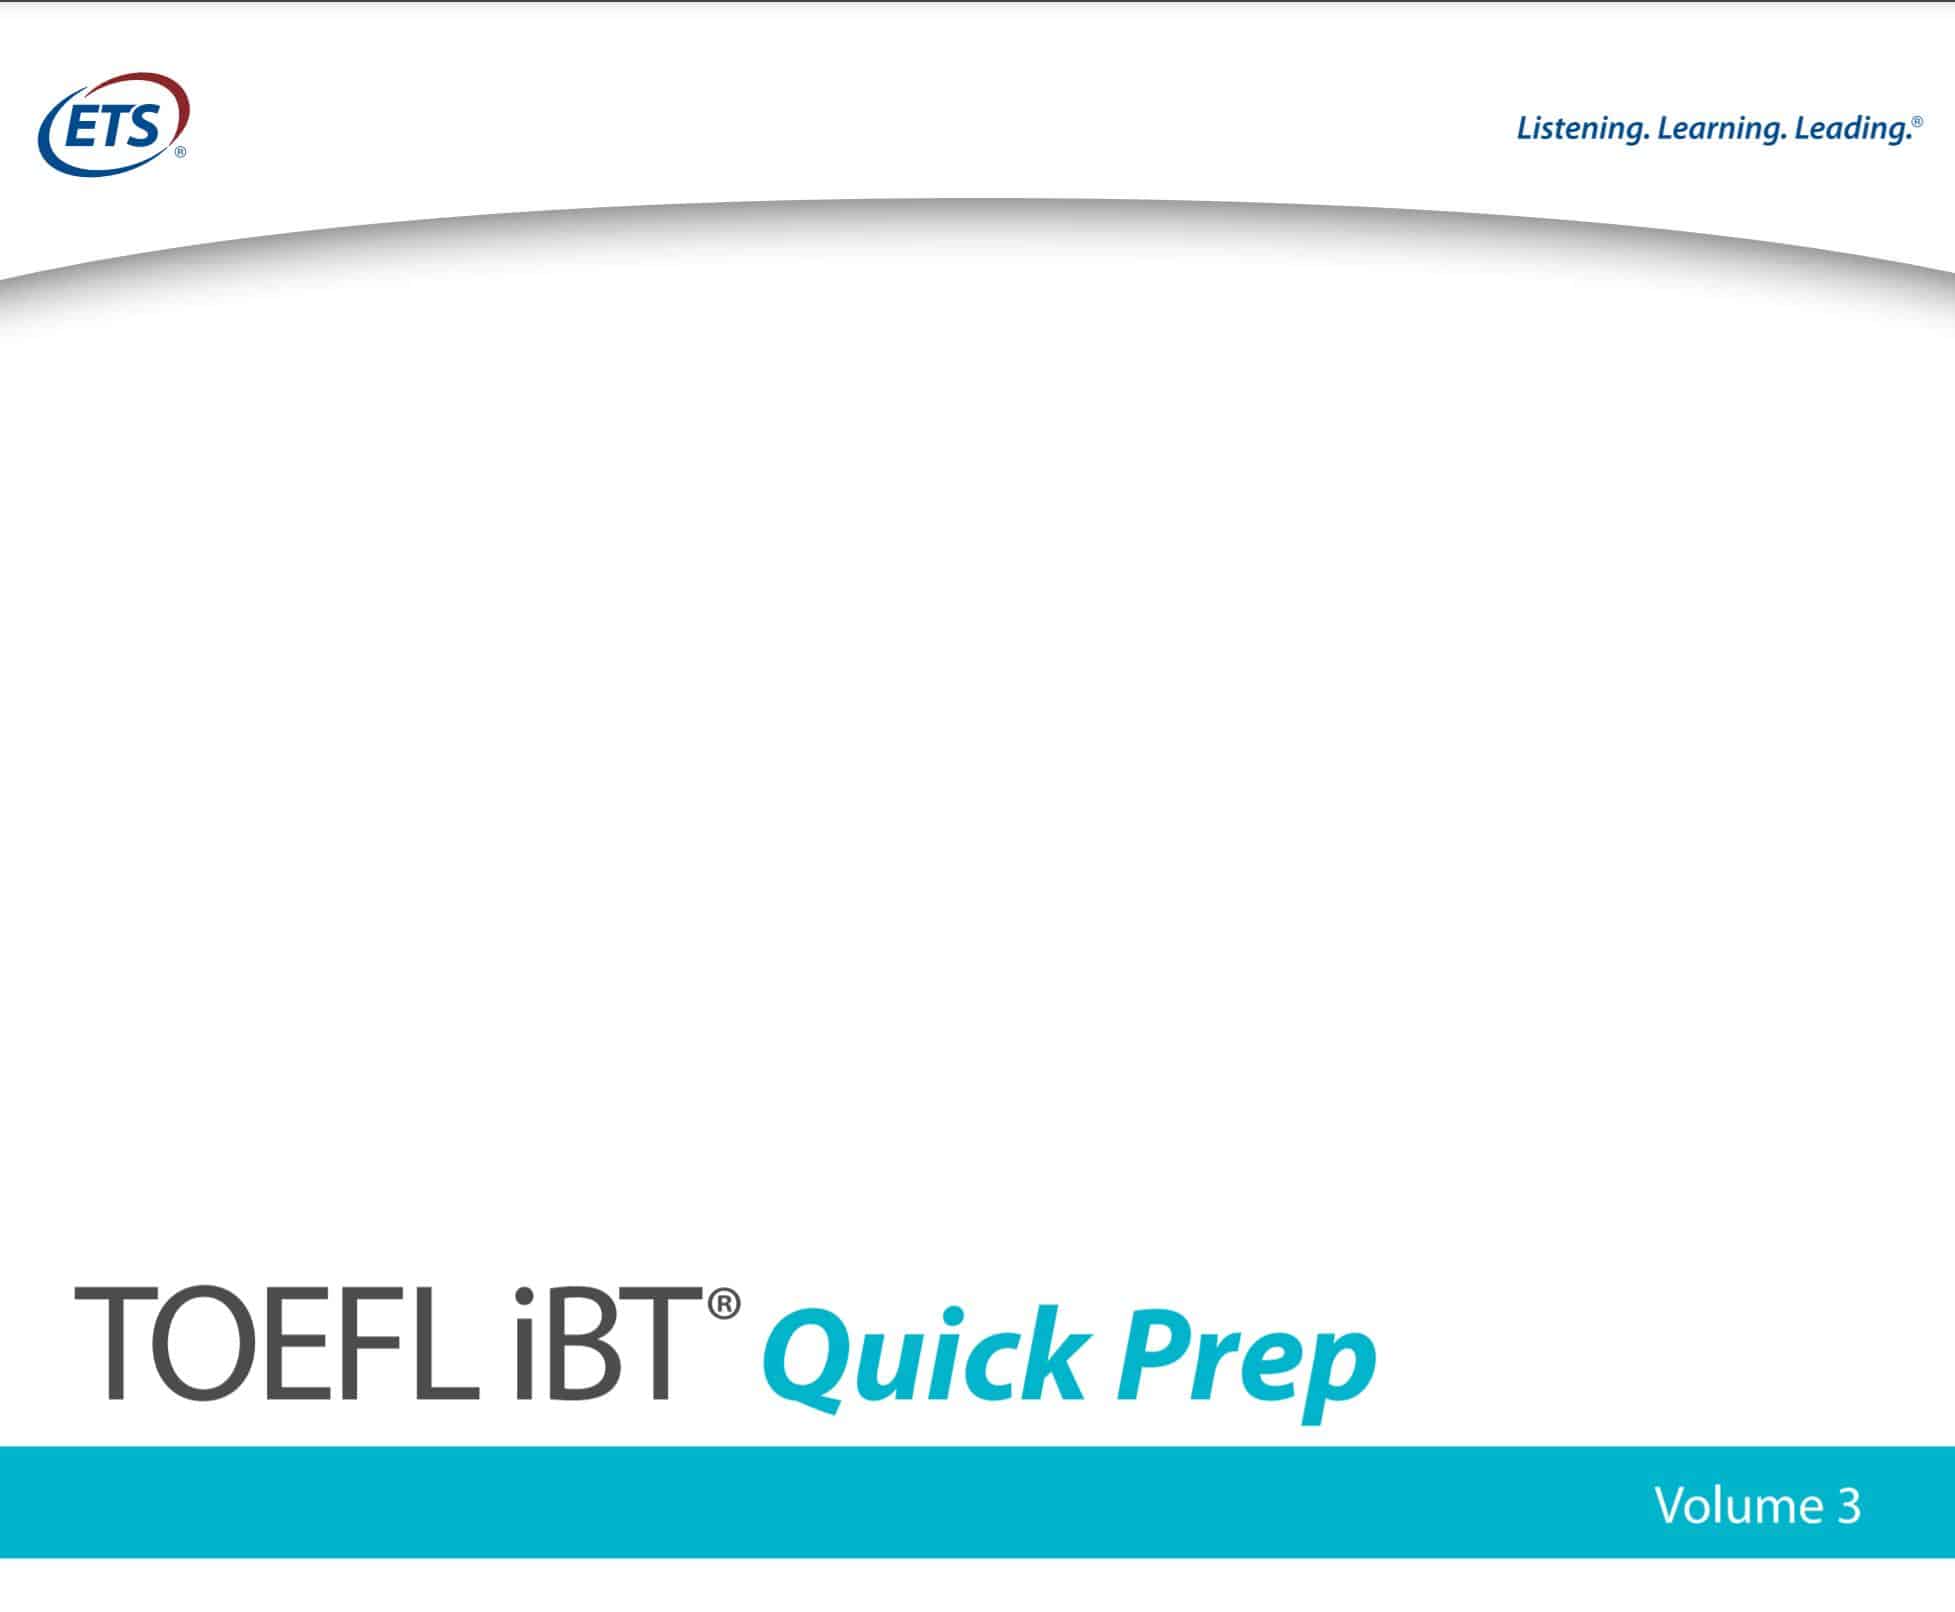 TOEFL iBT Quick Prep Book or Guide